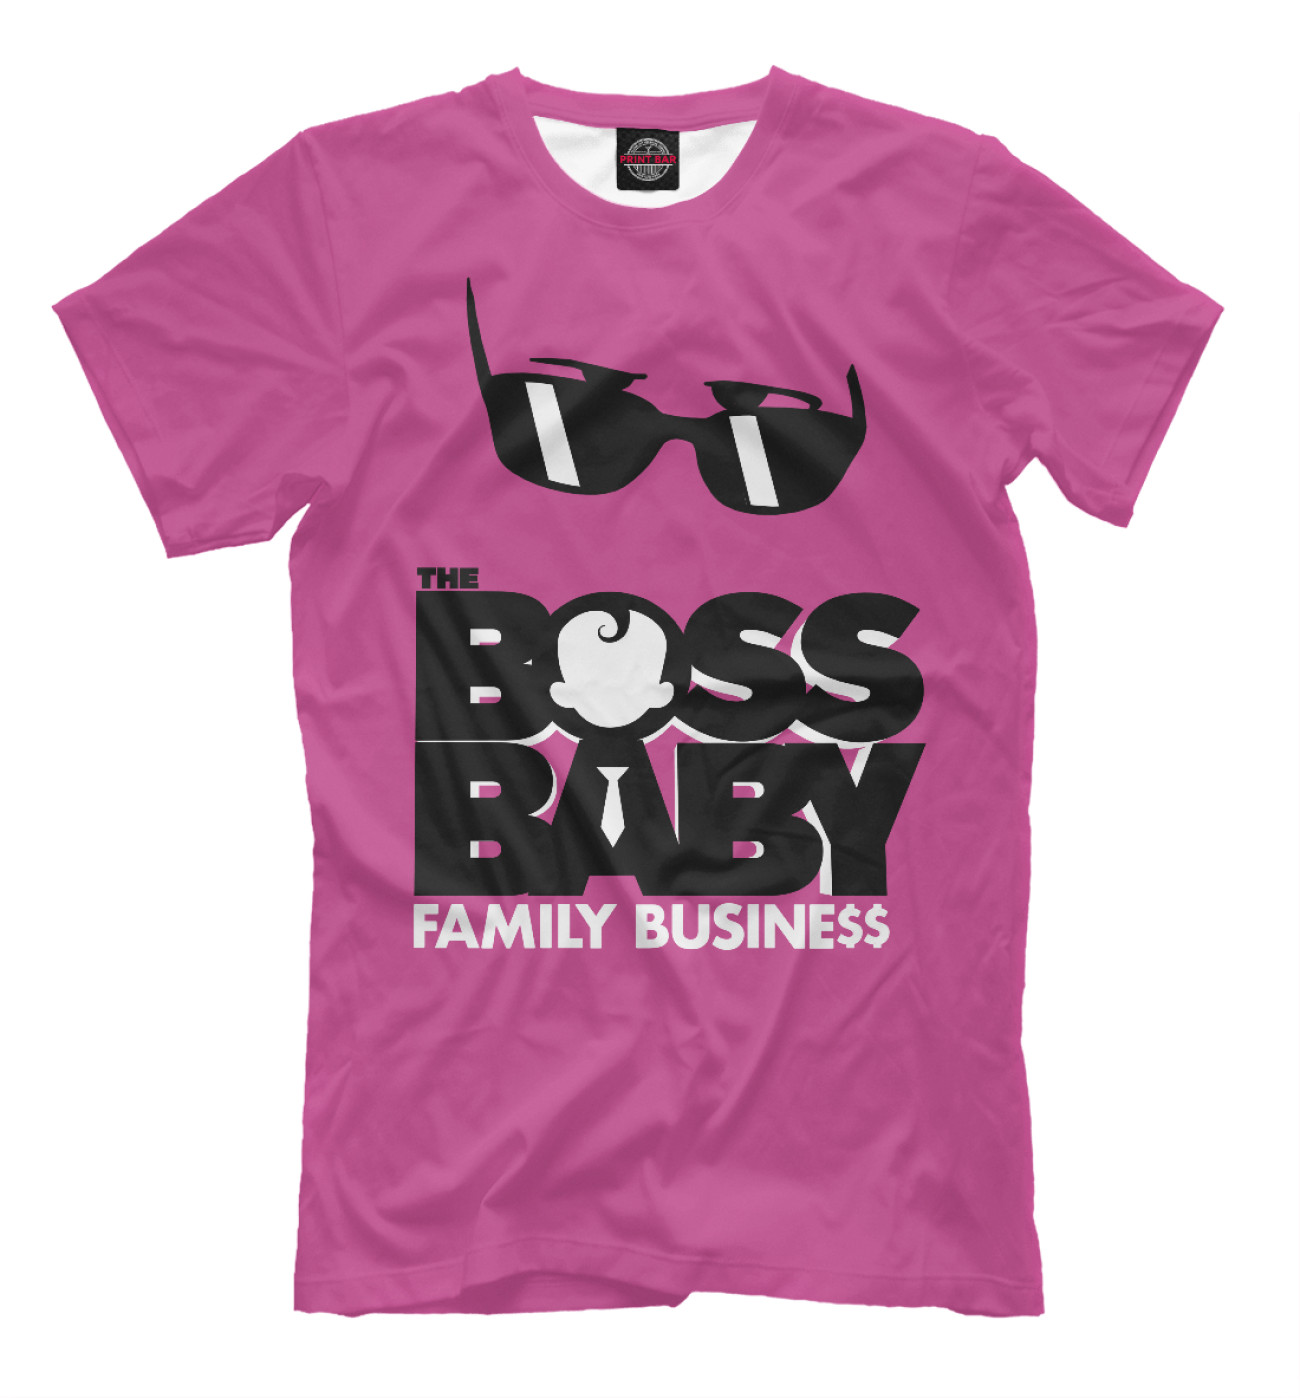 Мужская Футболка Boss Baby: family business, артикул: MFR-405727-fut-2